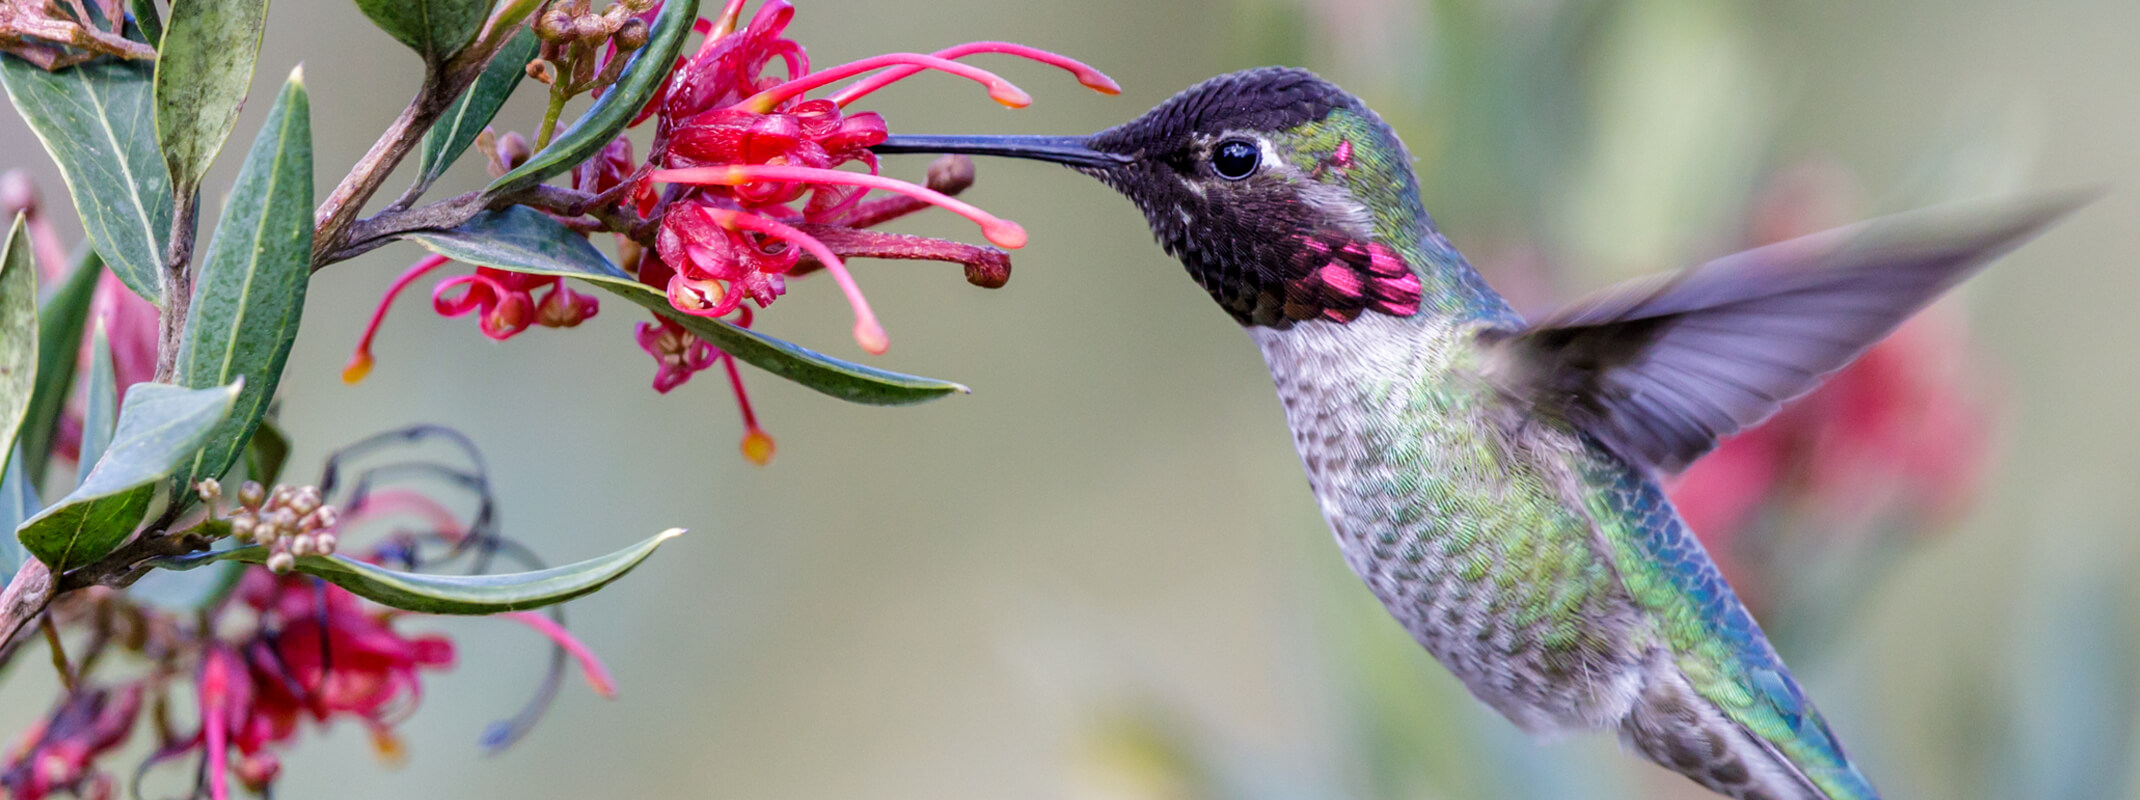 Hummingbird looking for nectar in fuchsia plant